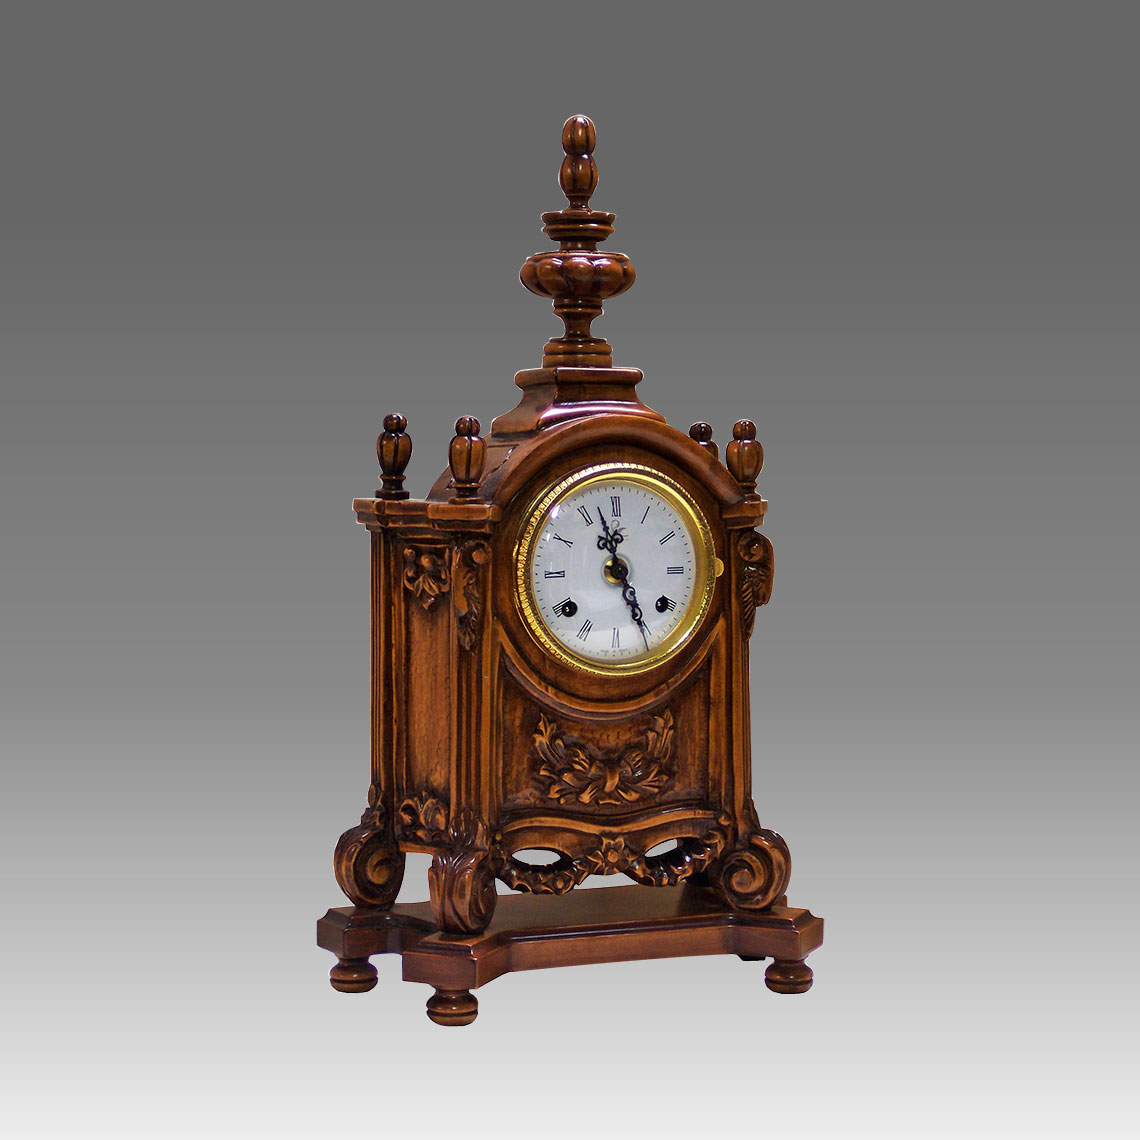 Mante Clock, Table Clock, Cimn Clock, Art.323/1 walnut - Bim Bam melody on Bells, white round dial